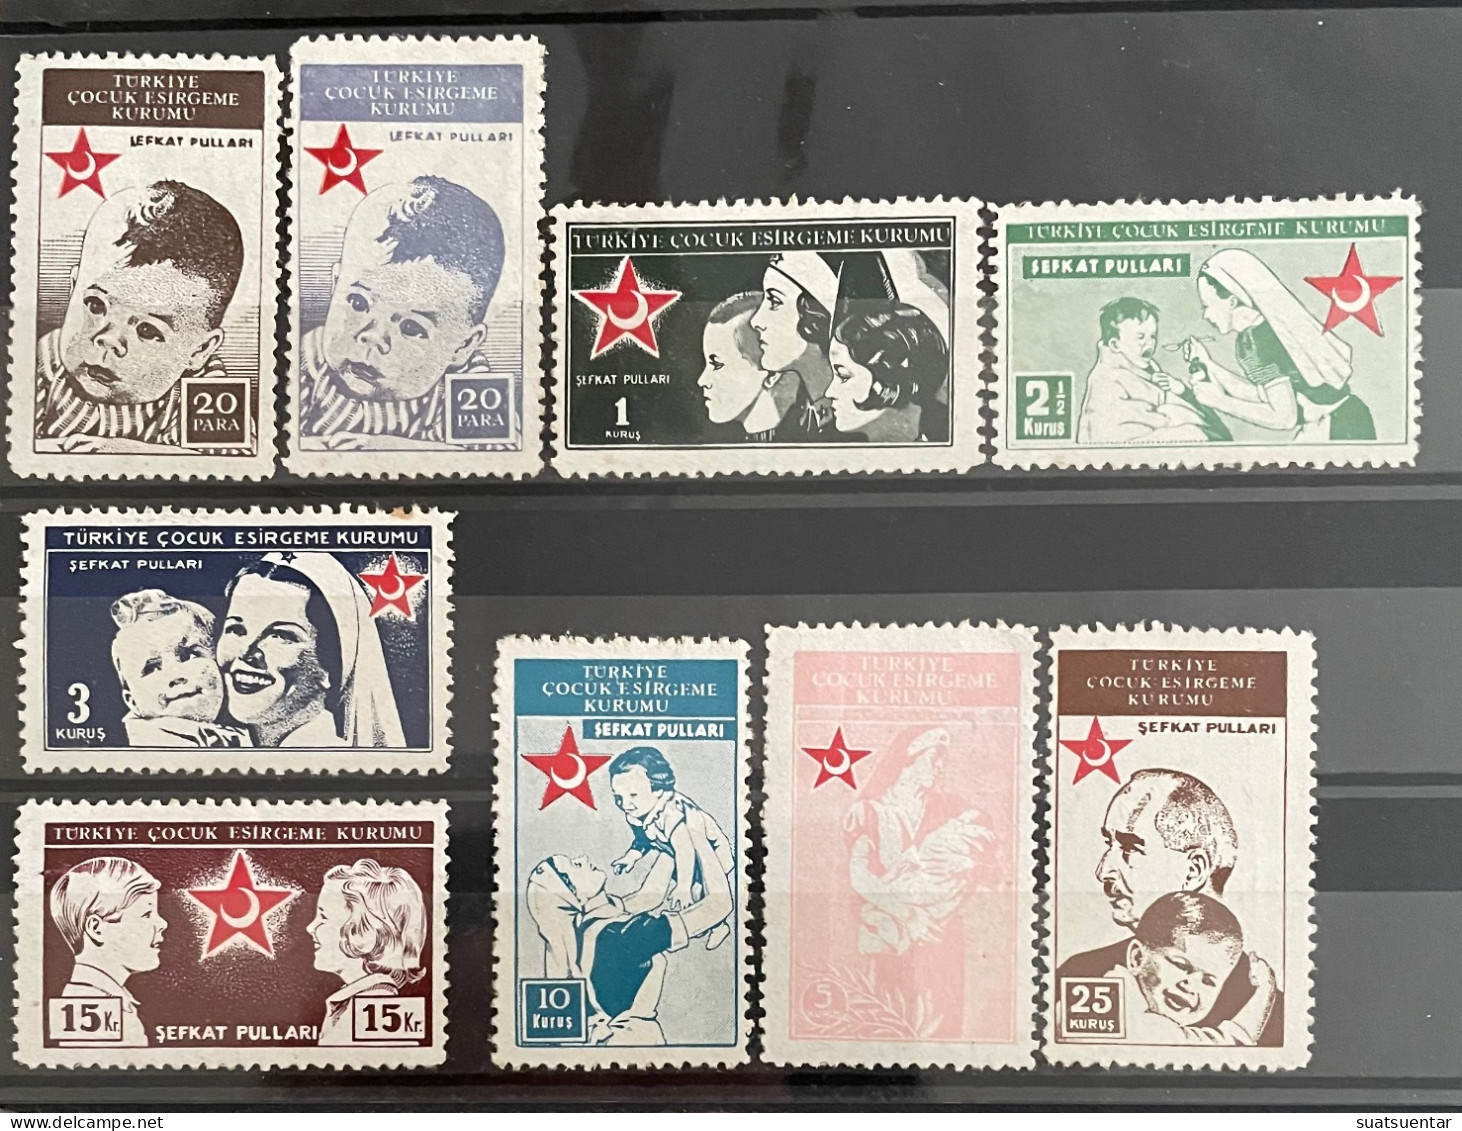 1942 23.April Children Festival MH - Unused Stamps